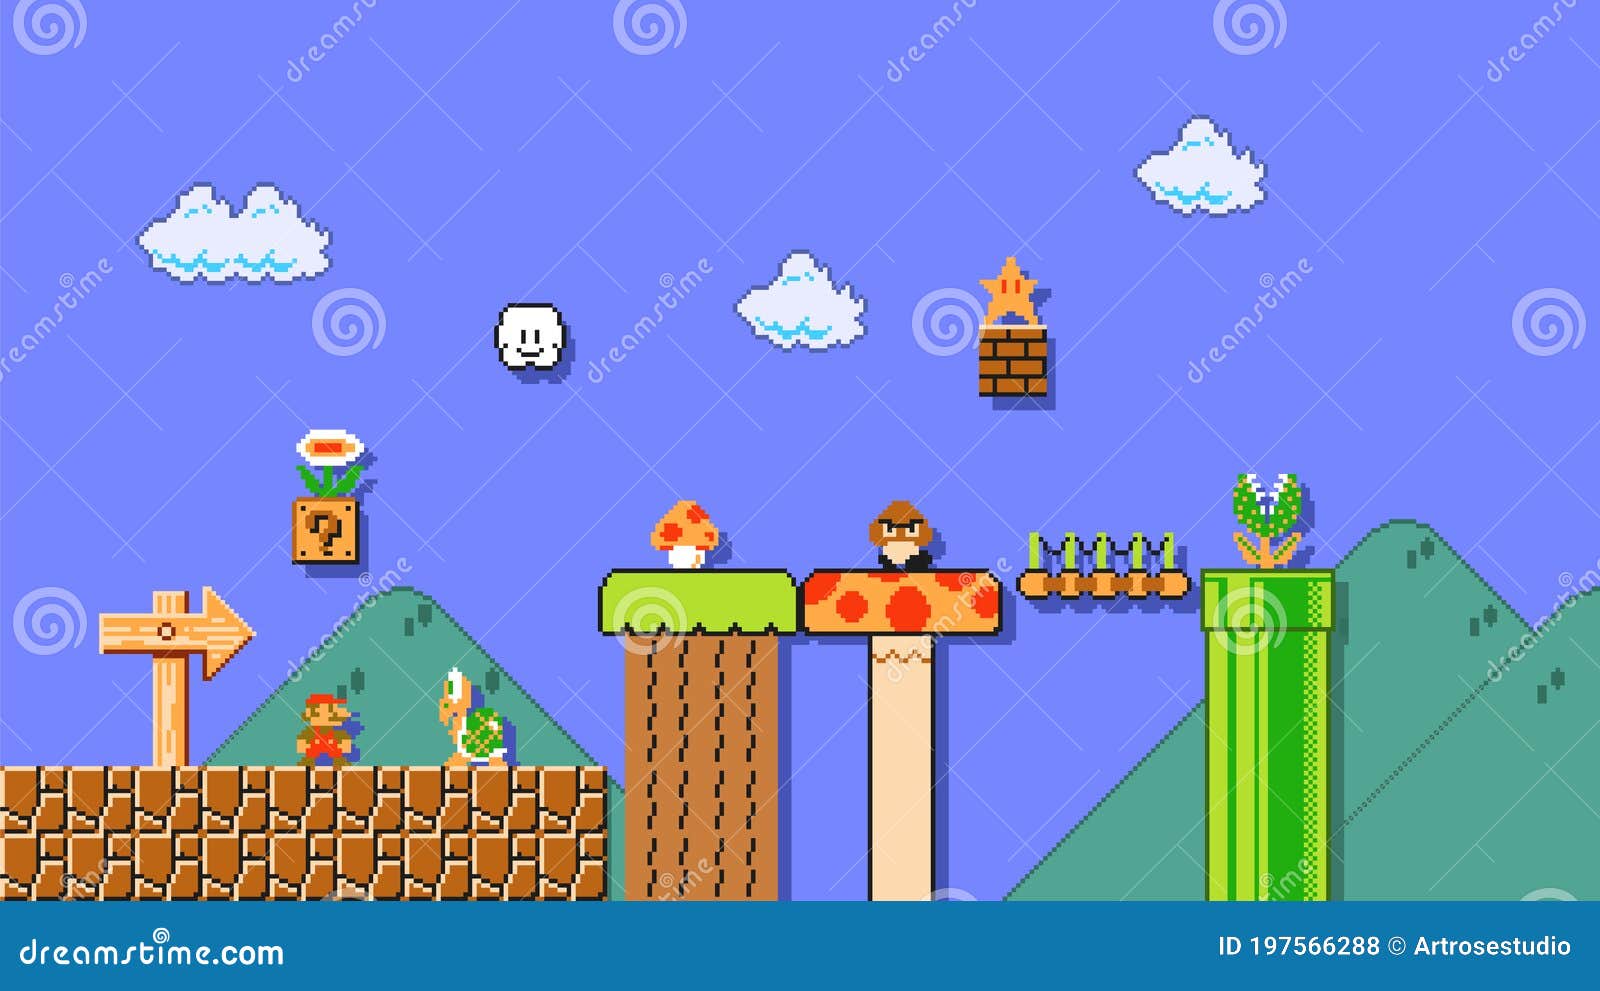 Hjælp biografi planer September 11, 2020: Art of Super Mario Bros Classic Video Game, Pixel  Design Vector Illustration Editorial Stock Photo - Illustration of luigi,  brothers: 197566288